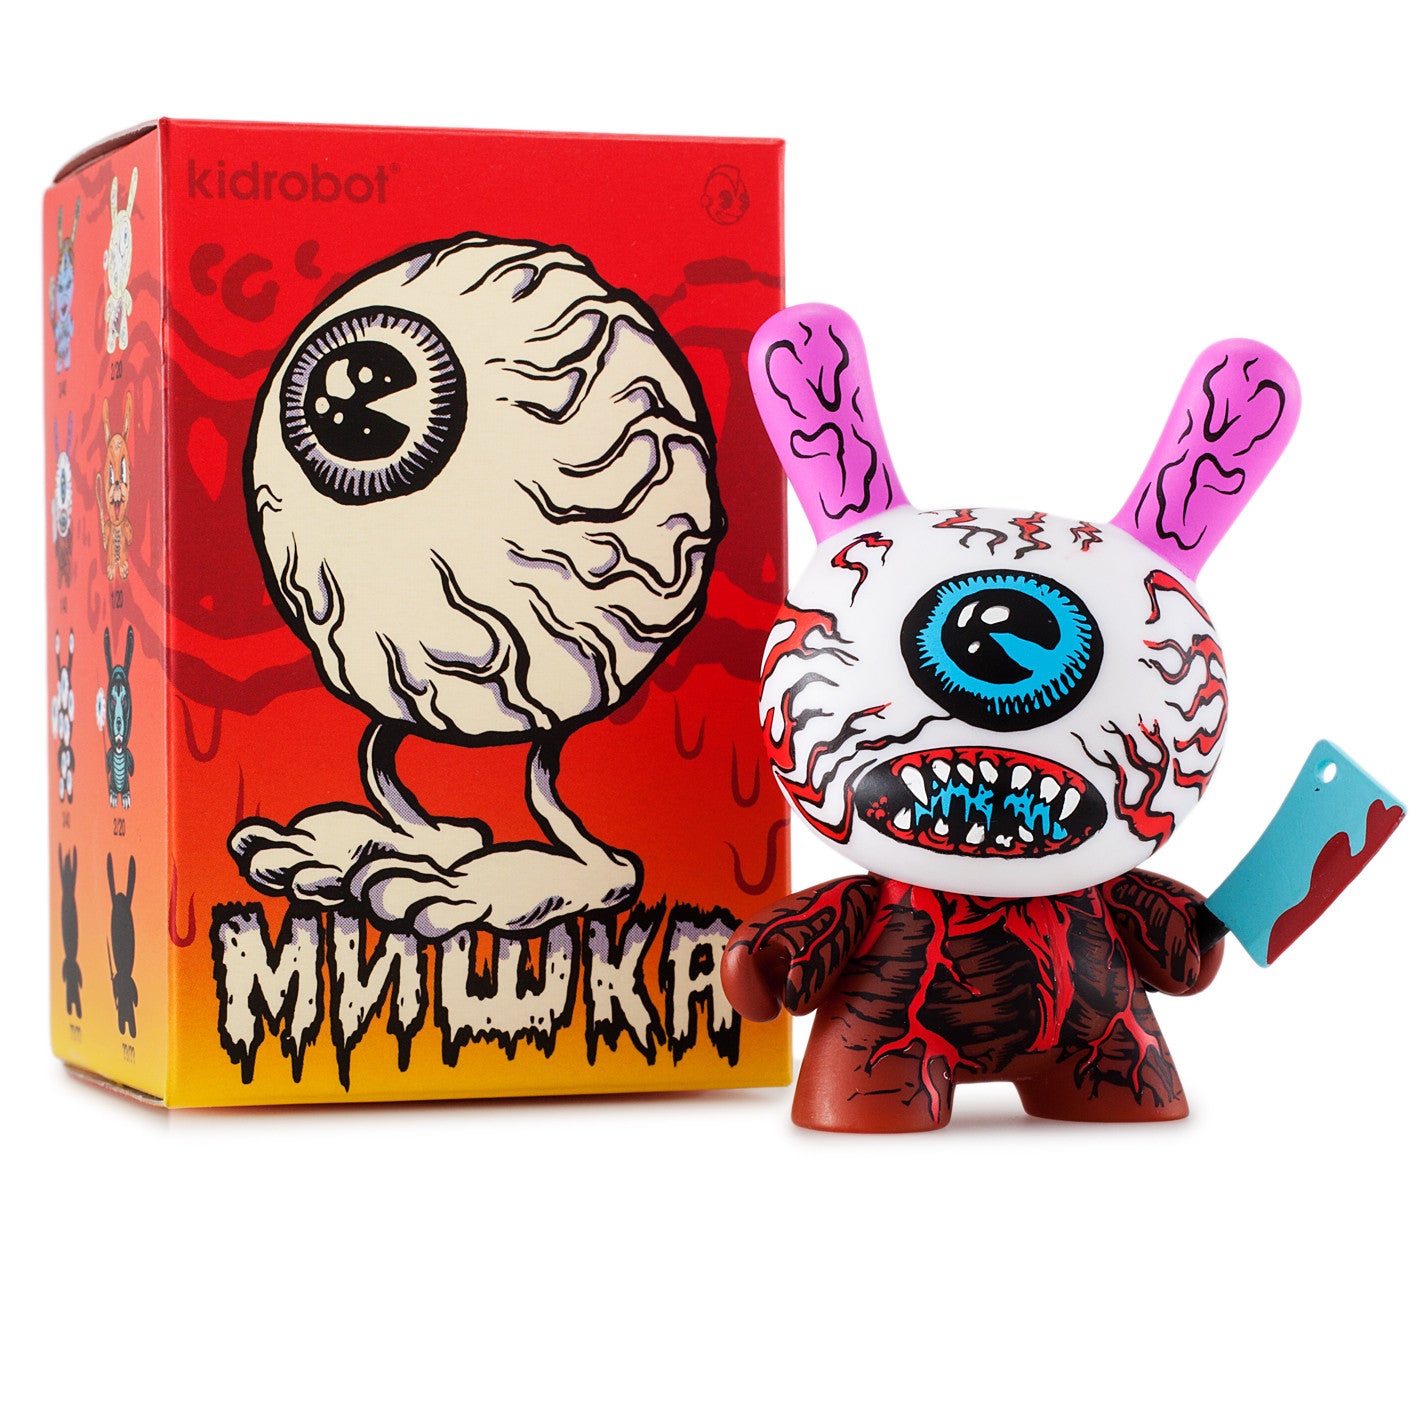 Mishka Dunny Blind Box Series by Kidrobot x Mishka - Mindzai
 - 1